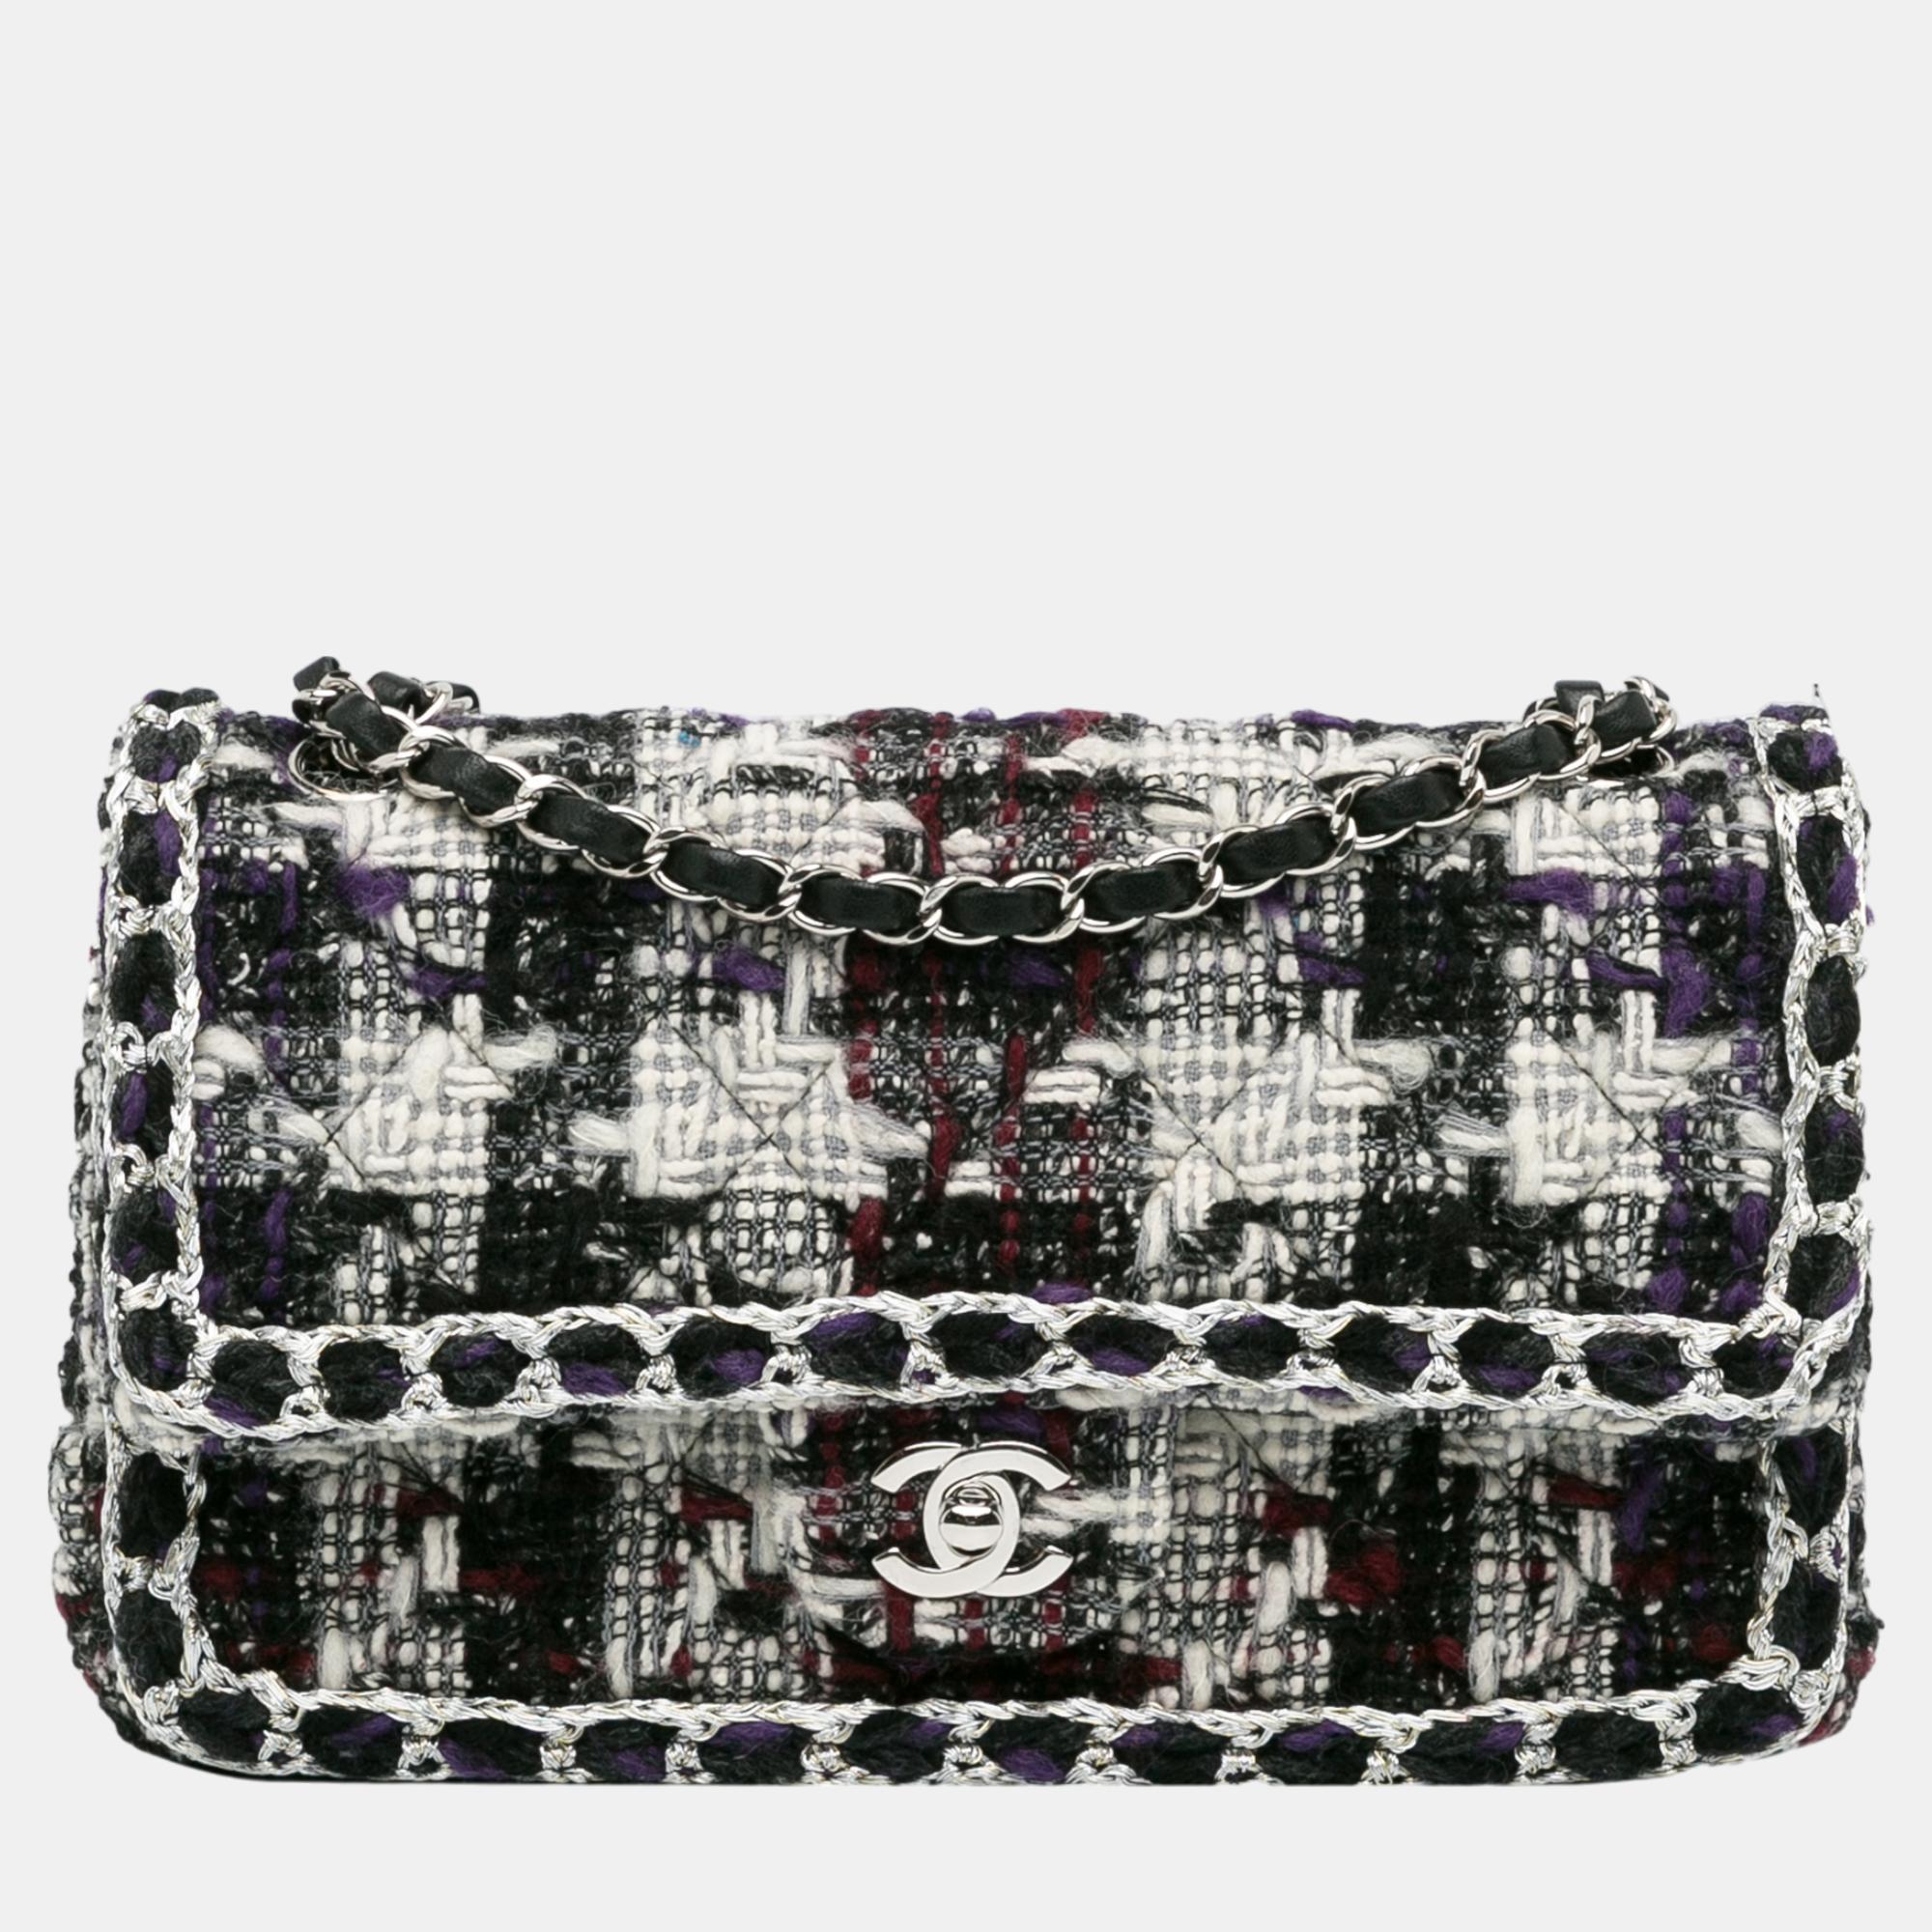 Chanel black/white medium classic tweed double flap